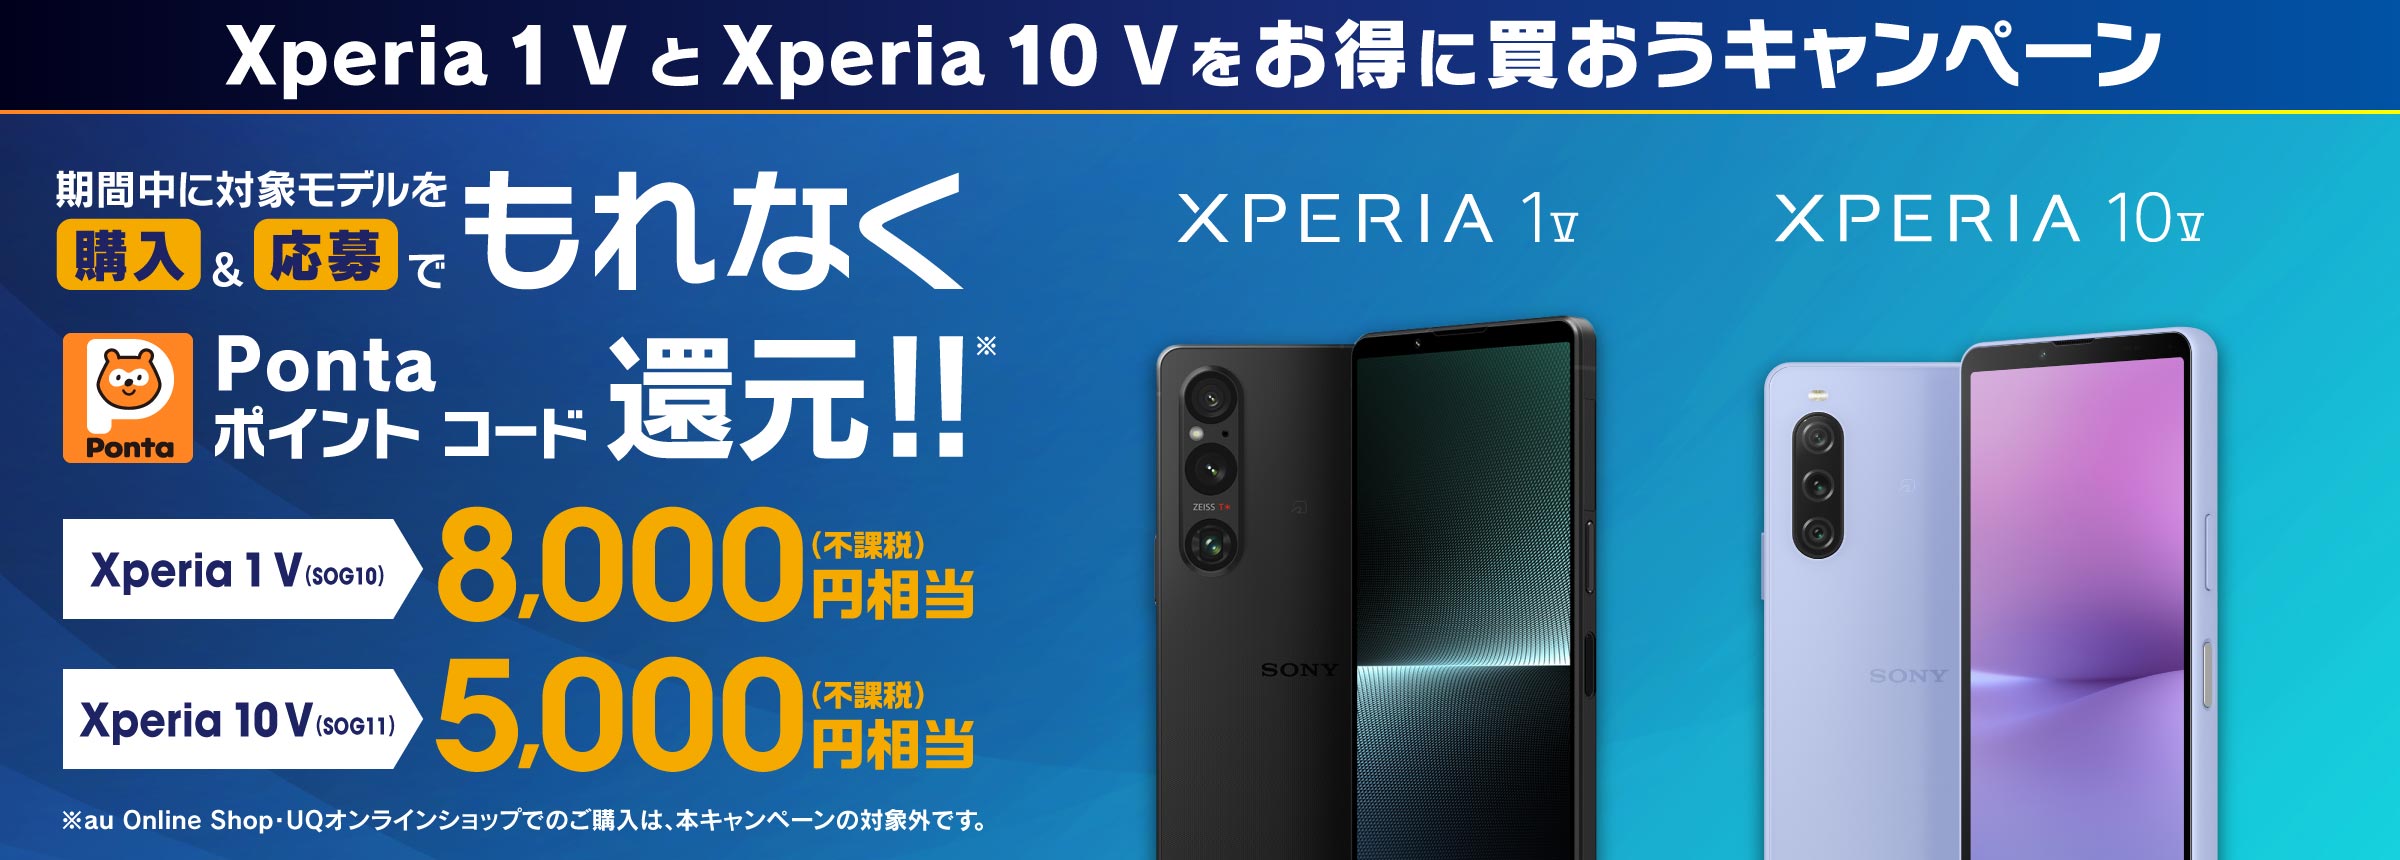 Xperia 1 V と Xperia 10 V をお得に買おうキャンペーン 期間中 購入＆応募でもれなく Pontaポイントコード 還元!! Xperia 1 V (SOG10) 8,000円相当(不課税) Xperia 10 V (SOG11) 5,000円相当(不課税) ※au Online Shop・UQオンラインショップでのご購入は、本キャンペーンの対象外です。